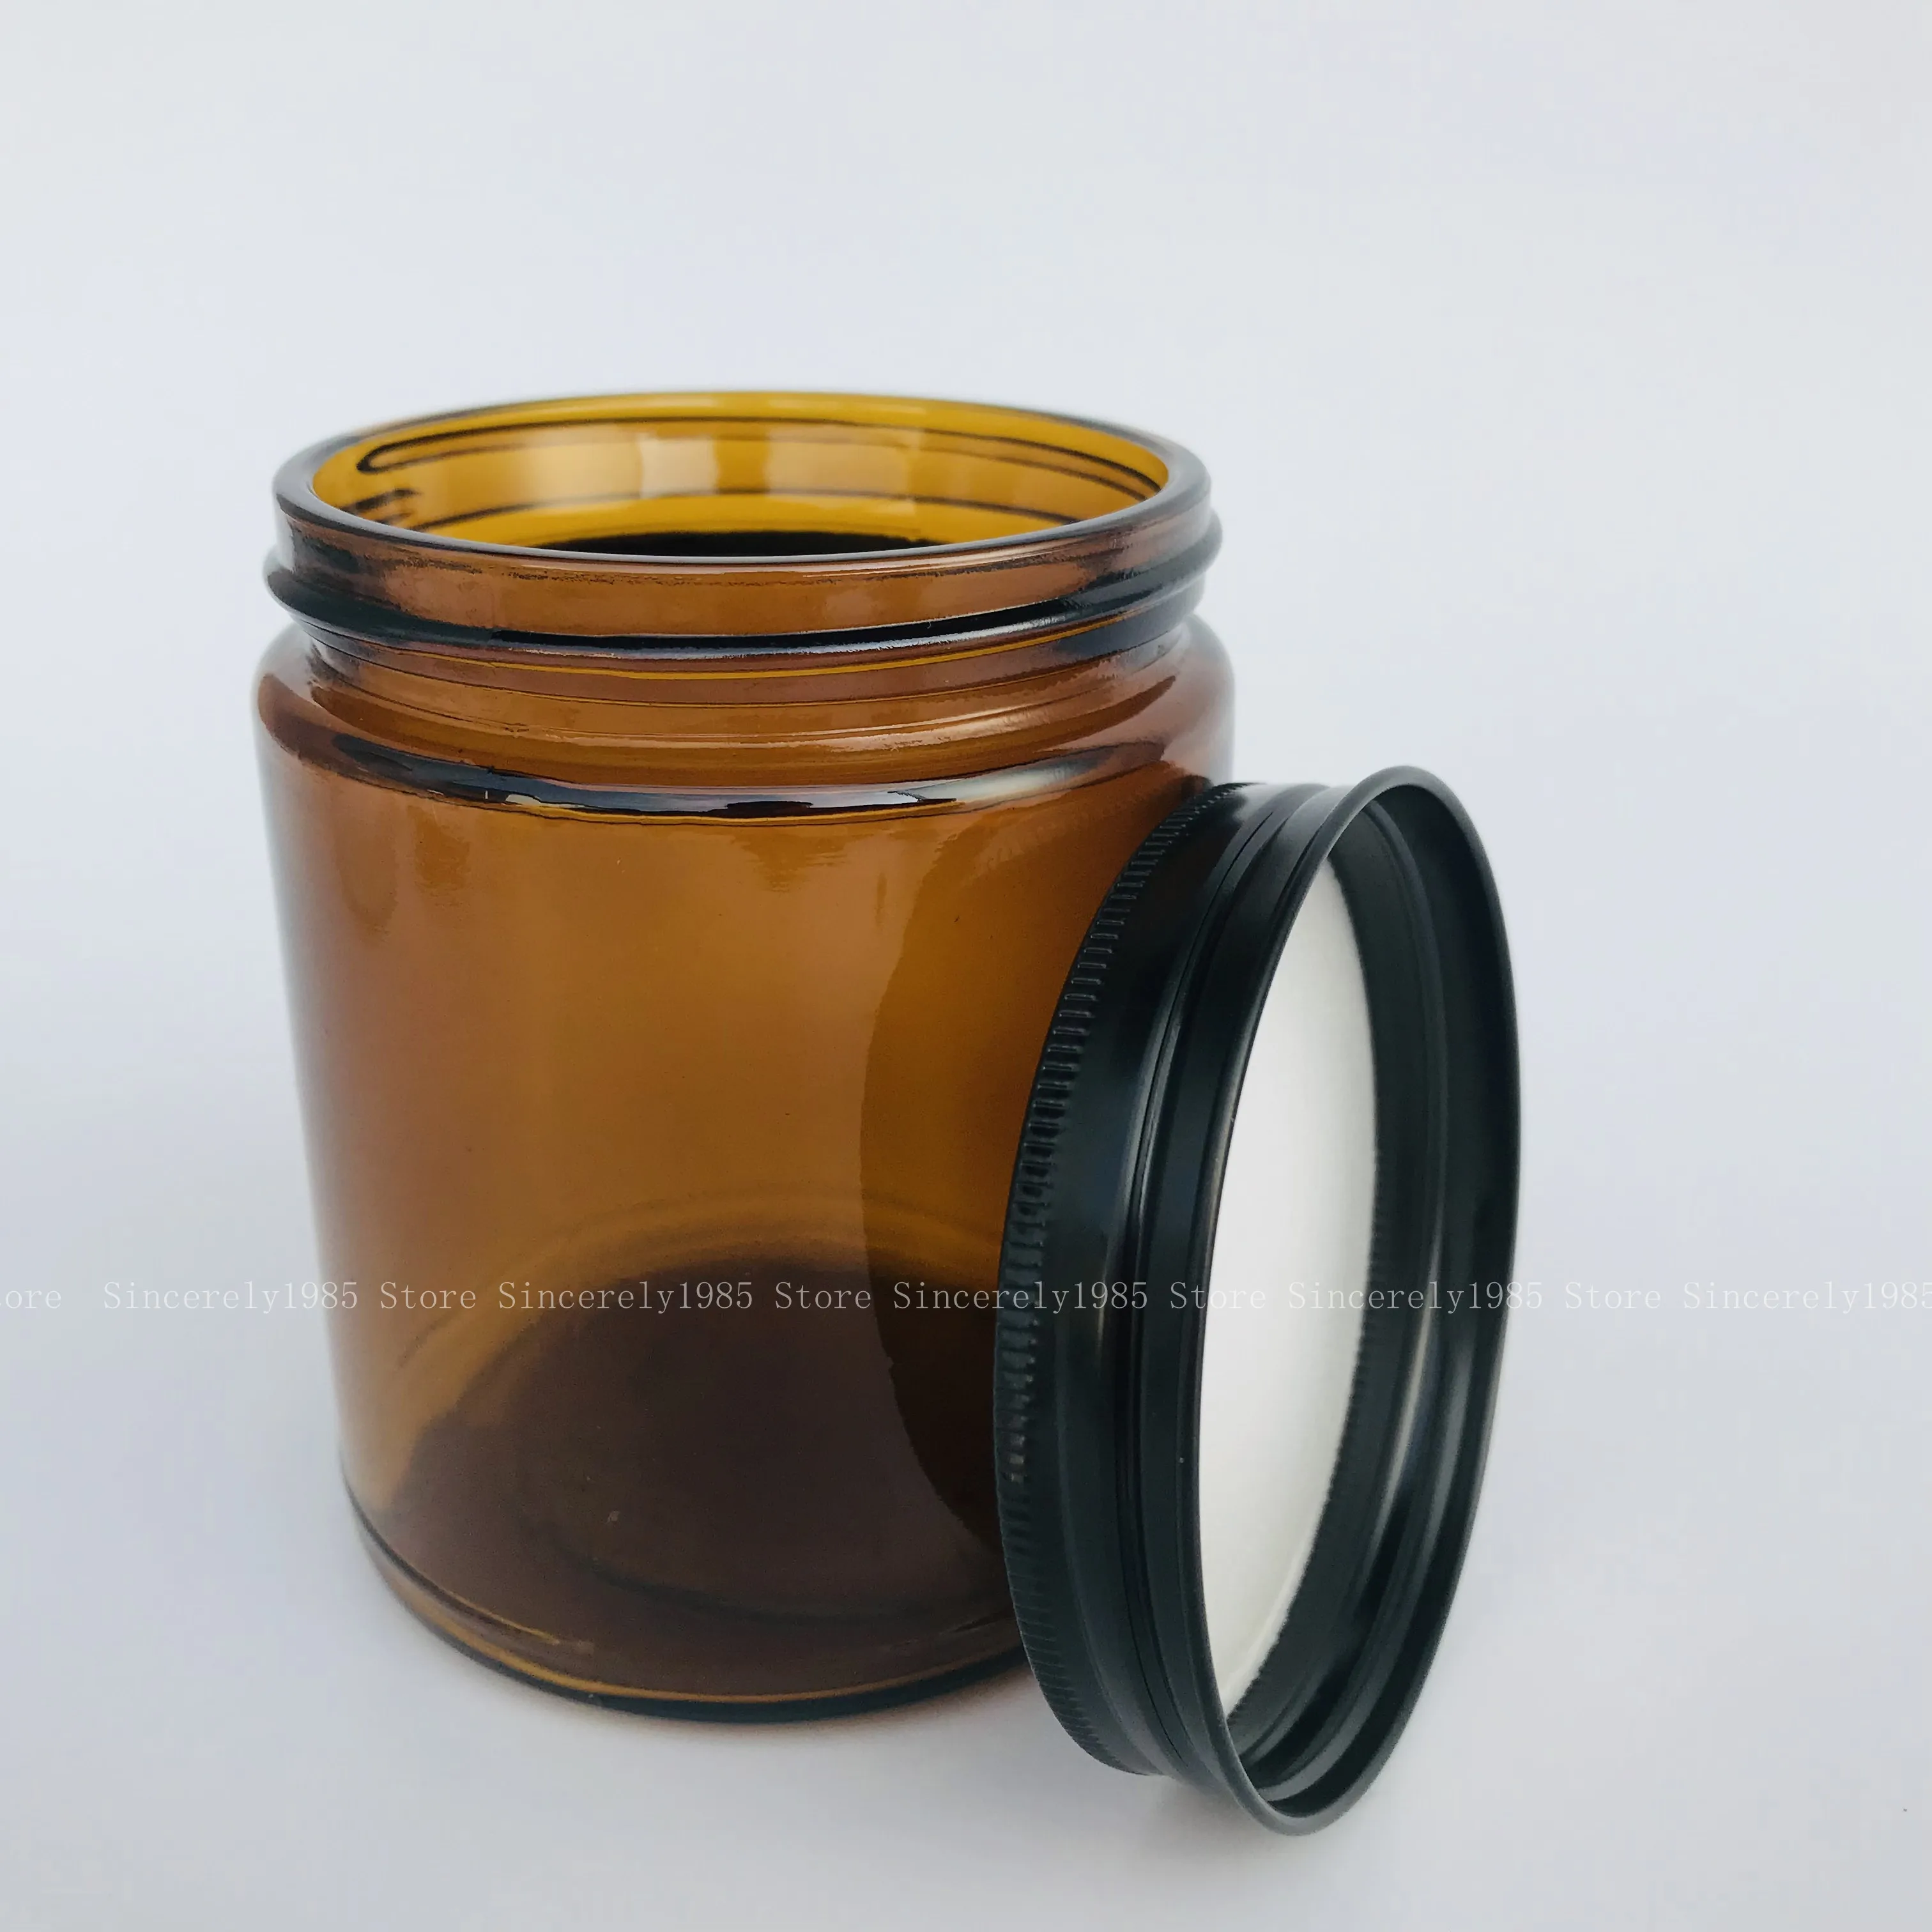 2pcs 250ml Amber Glass Candle Jars Empty Round Cosmetic Jar for DIY Aromatherapy Wax Melts Candles Salve Lotion Cream Storage kowalski stabat mater salve regina kowalski kcpeb haenchen